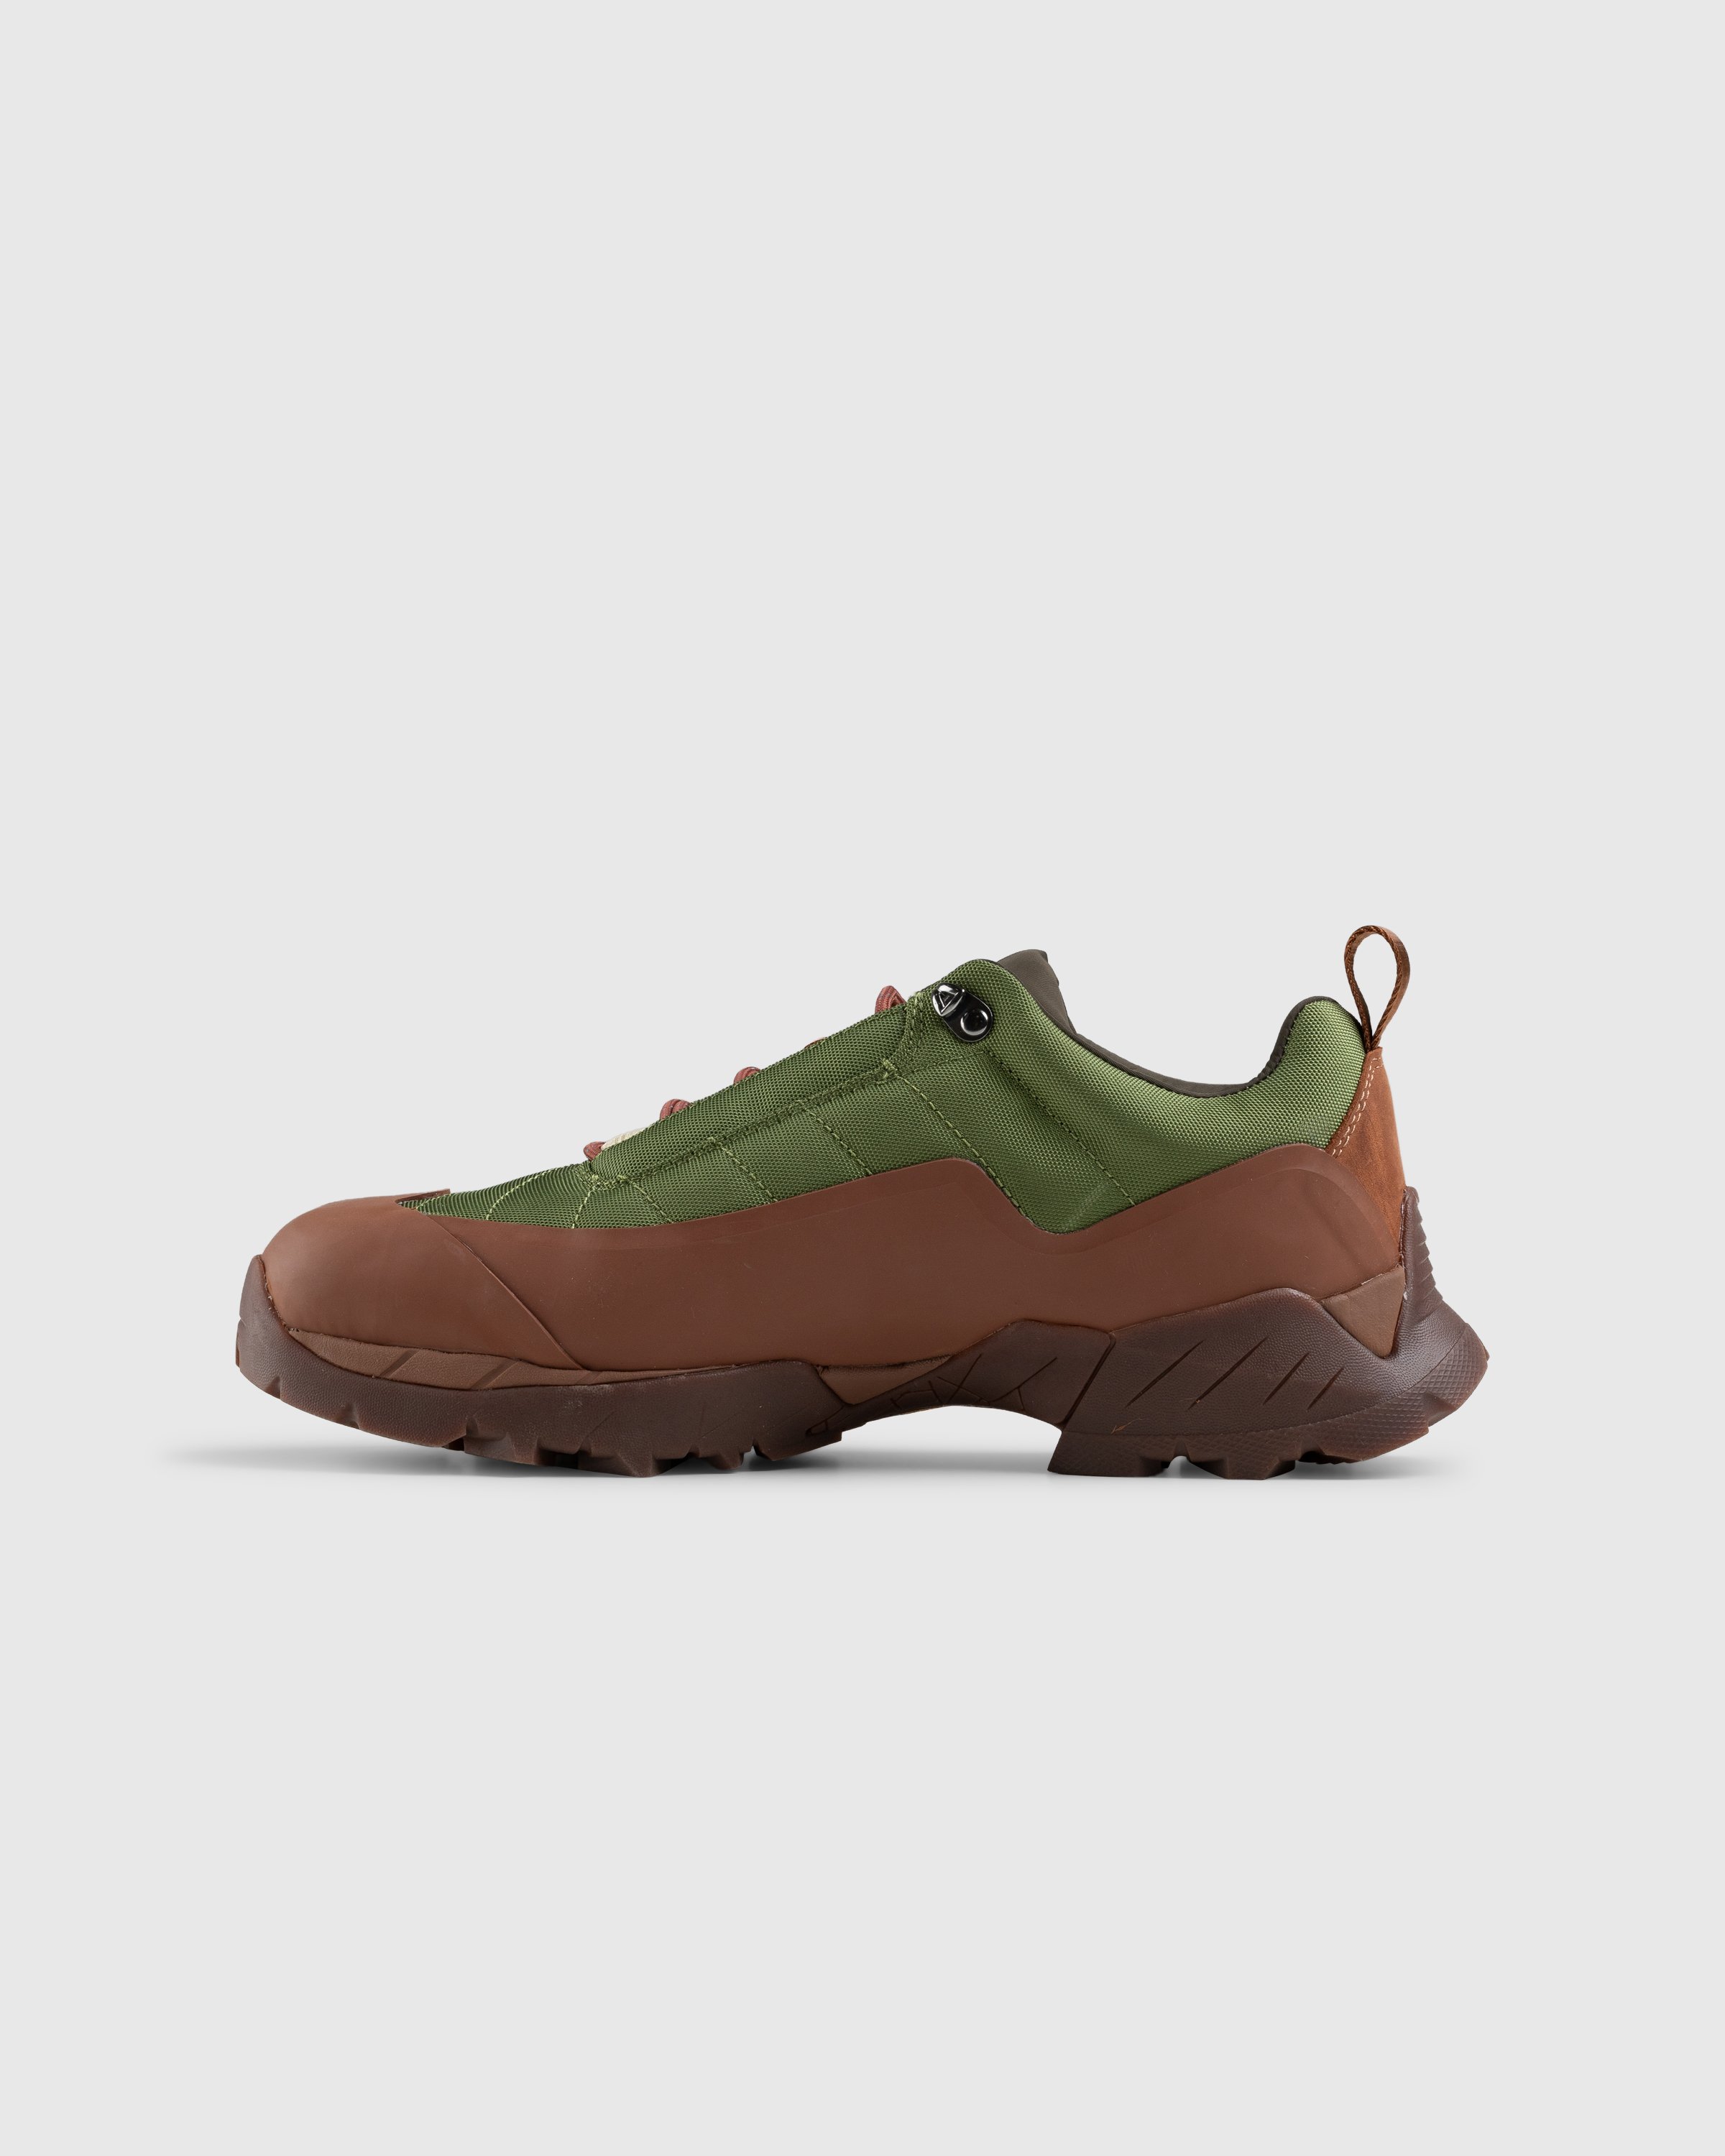 ROA - Katharina Sneakers Olive/Rust - Footwear - Green - Image 2